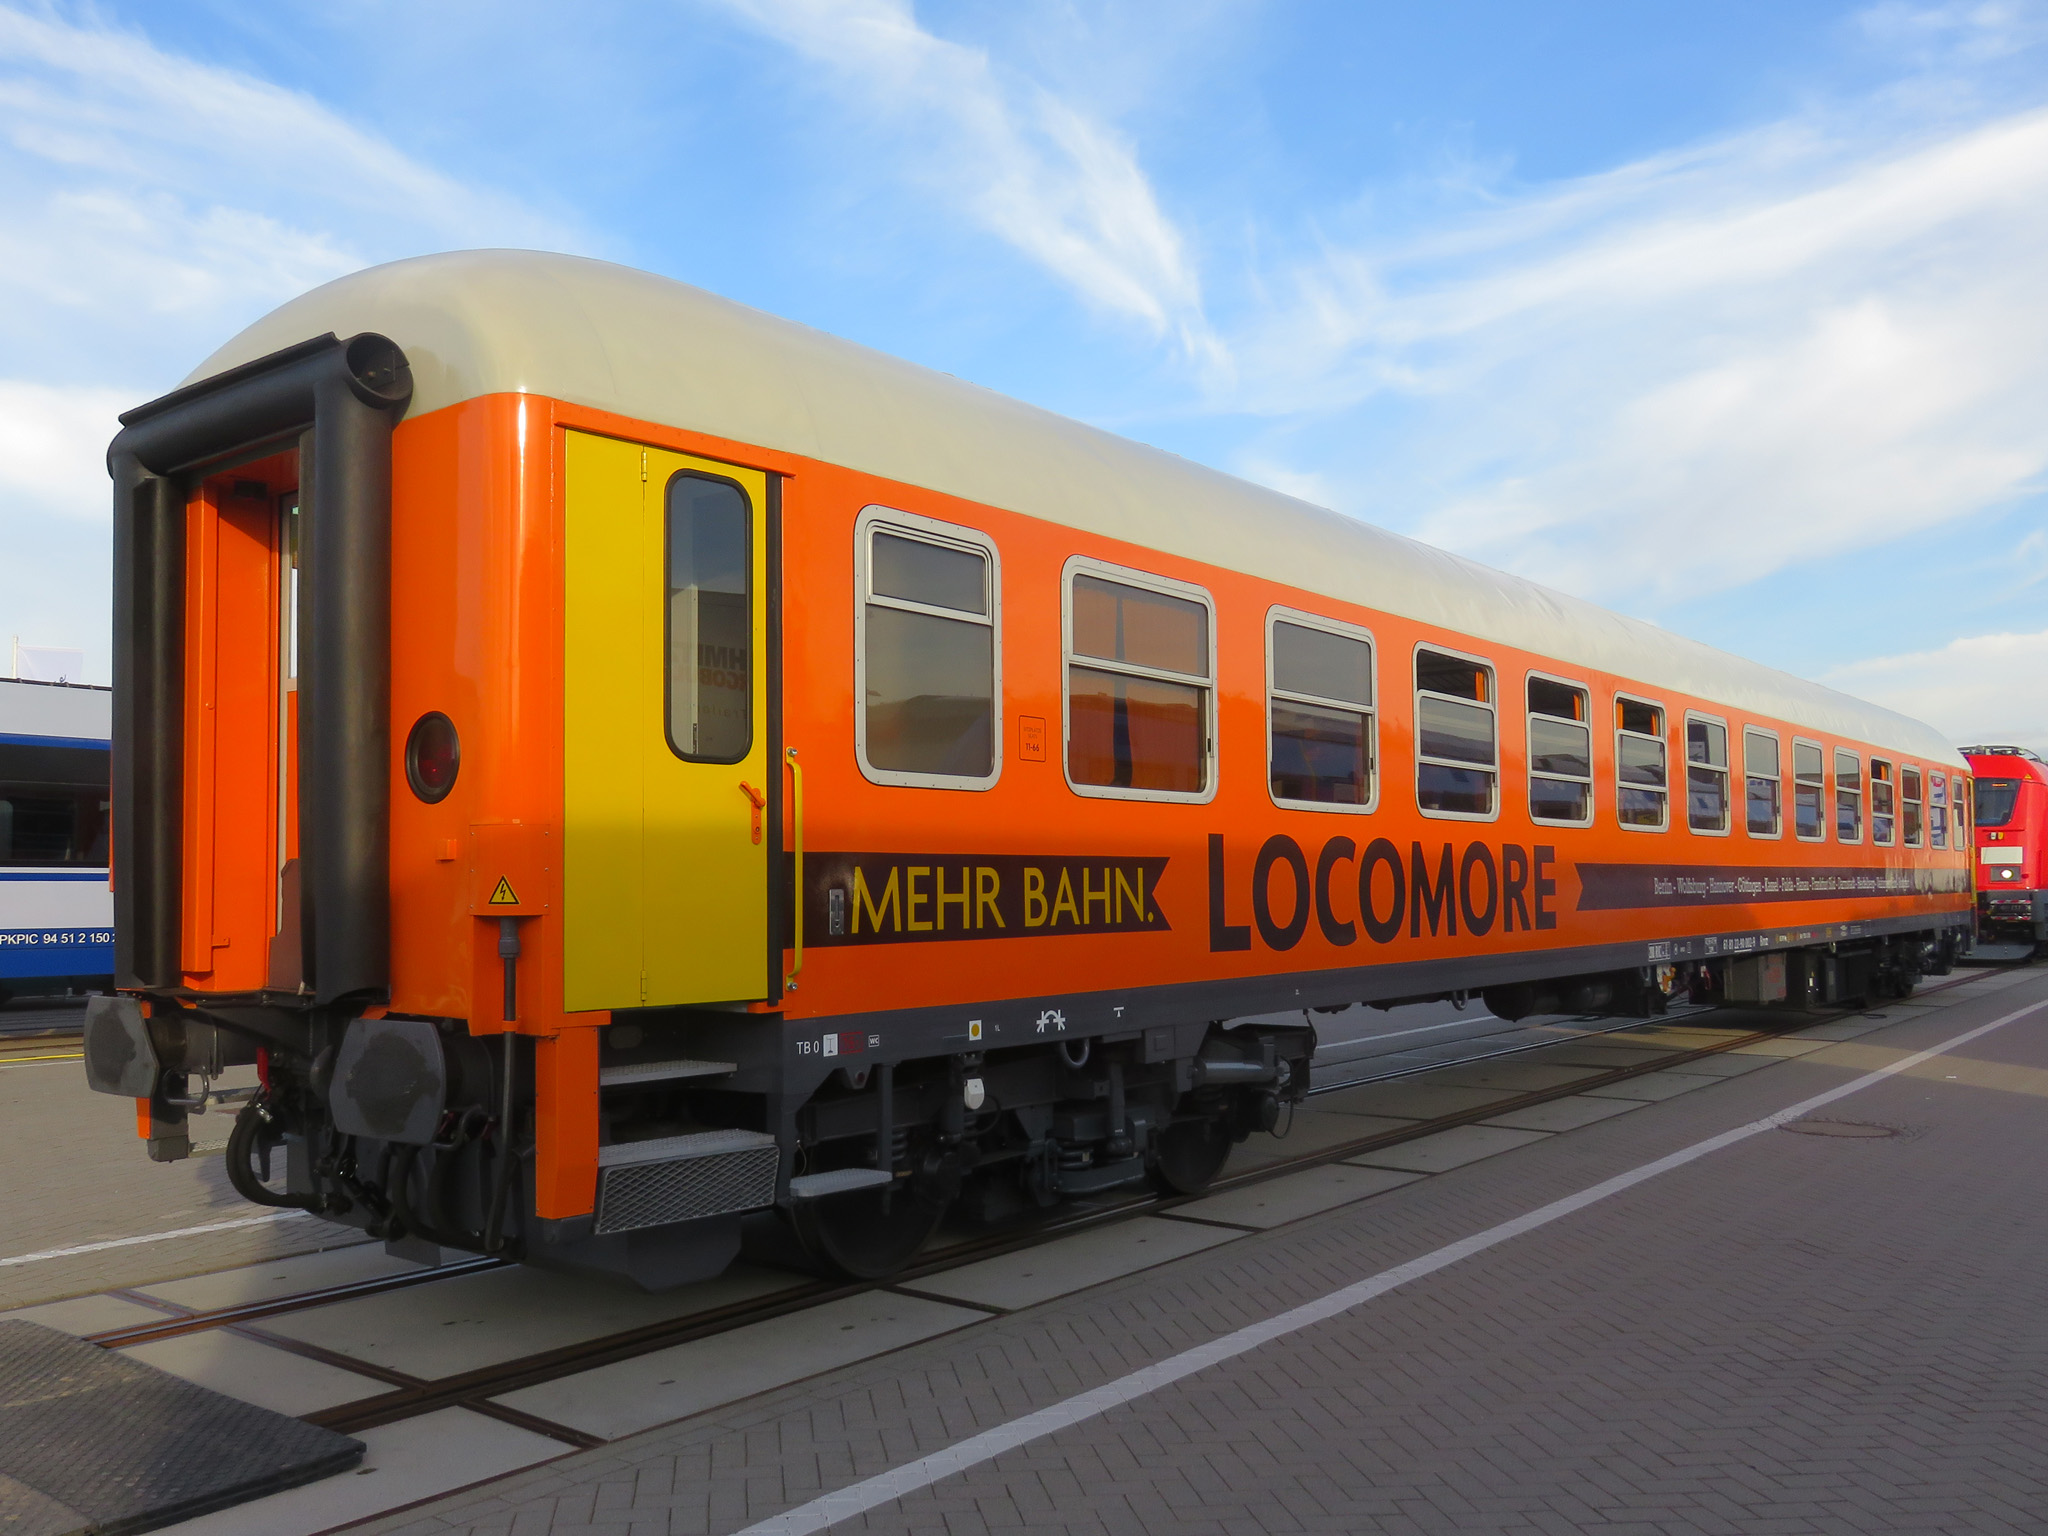 LEO Express to relaunch Locomore service - Railway Gazette